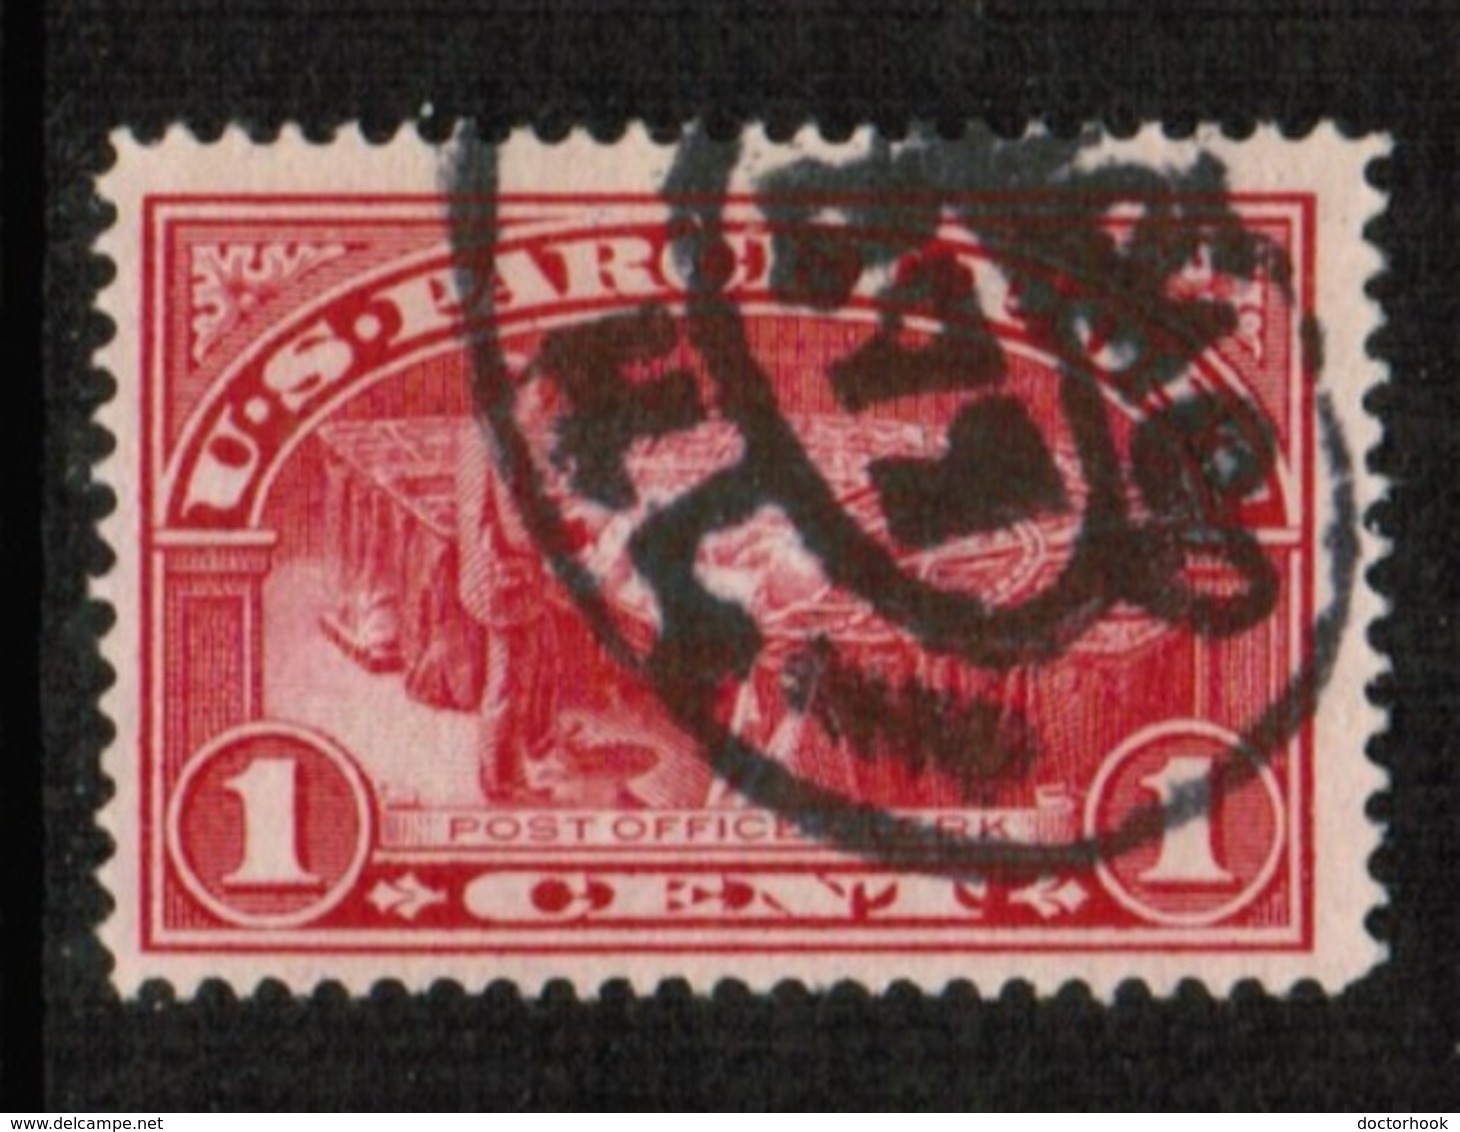 U.S.A.  Scott # Q 1 VF USED (Stamp Scan # 512) - Reisgoedzegels